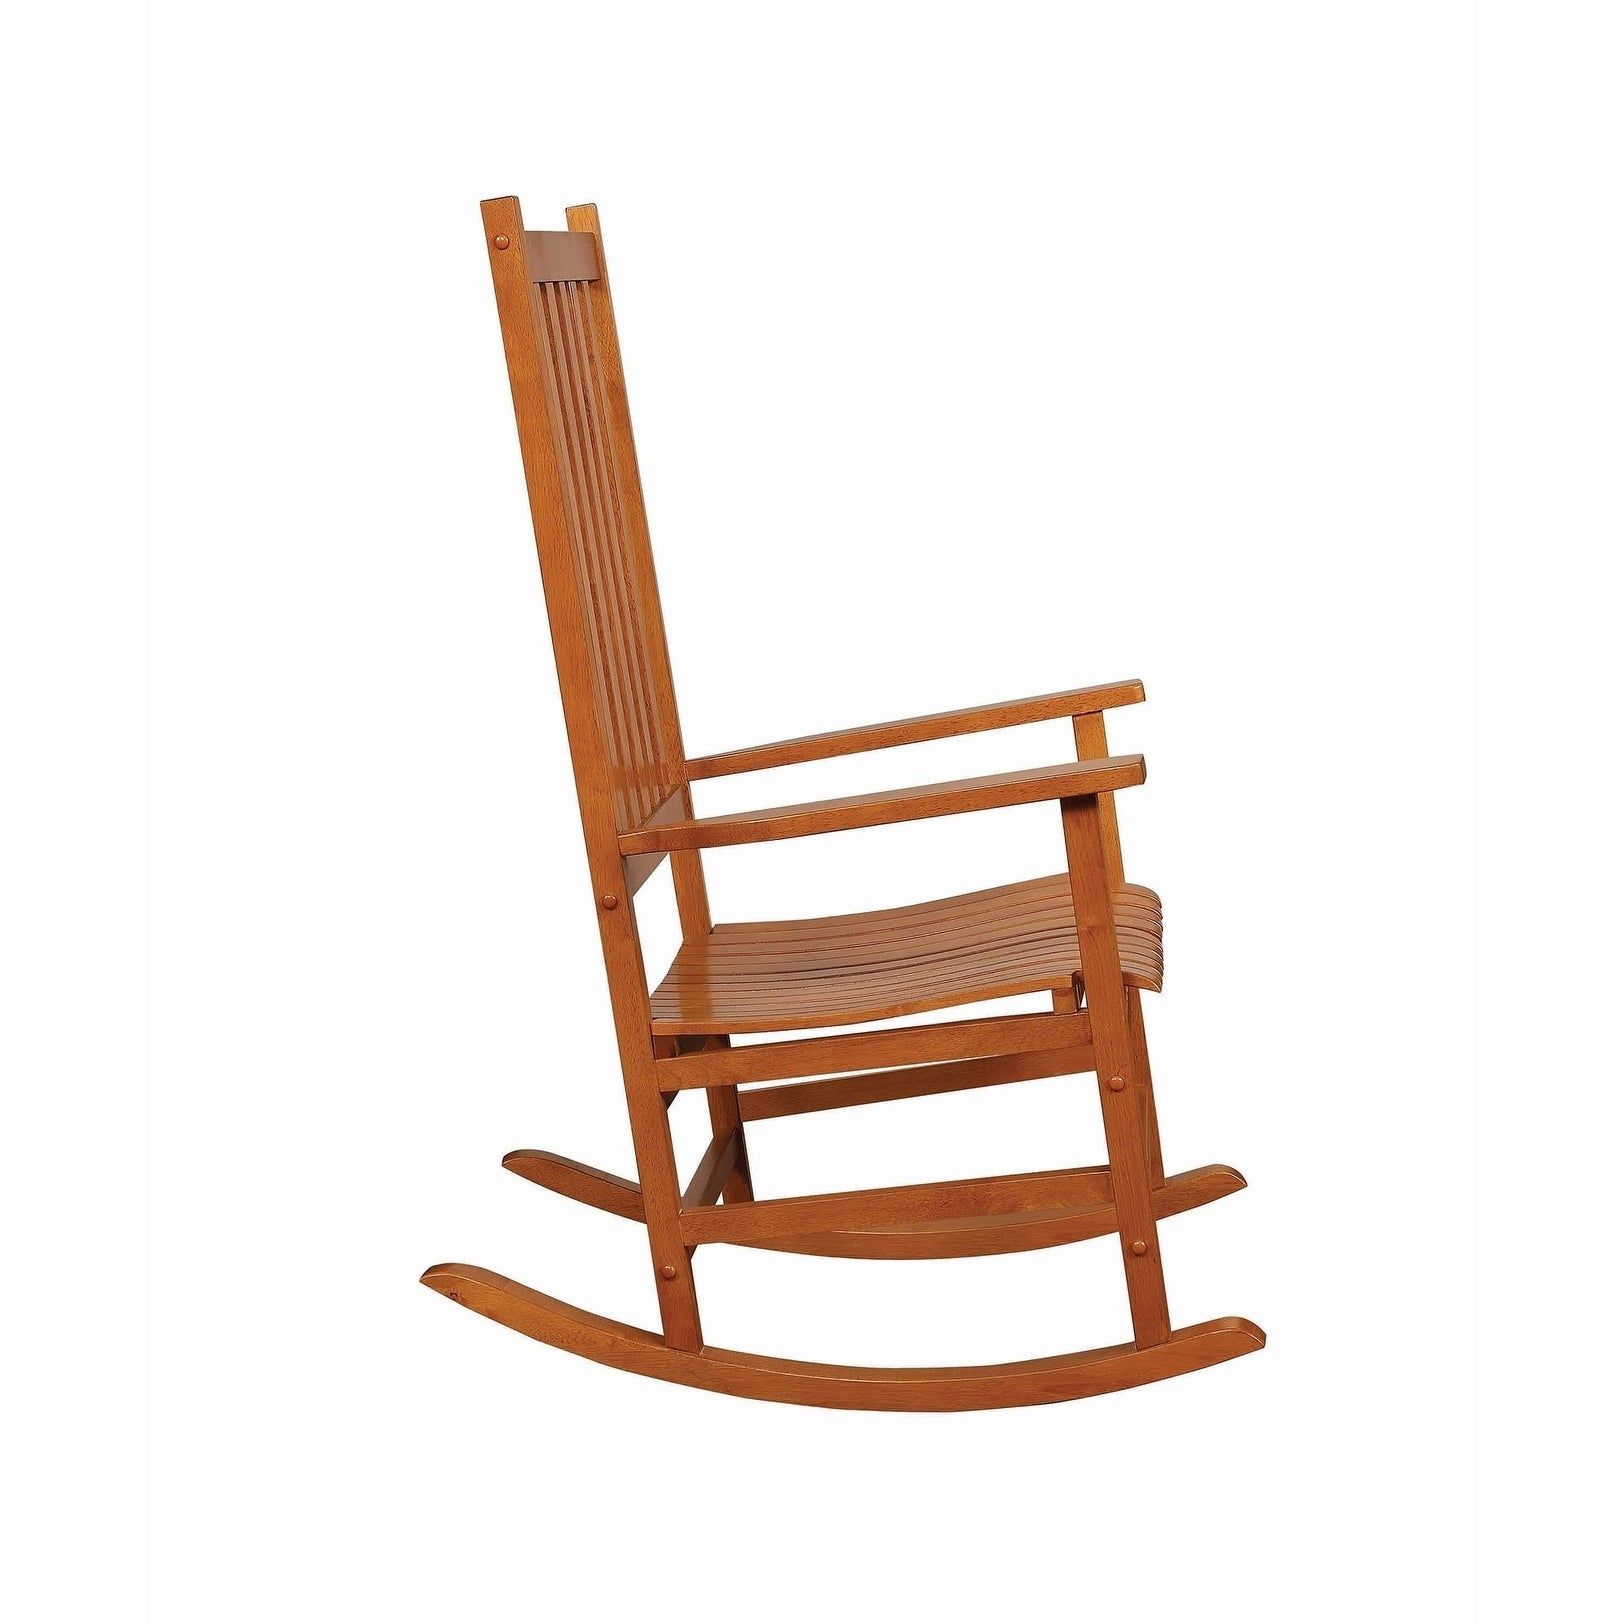 Cedarbaum Warm Brown Slat Back Rocking Chair Intended For Warm Brown Slat Back Rocking Chairs (Photo 1 of 20)